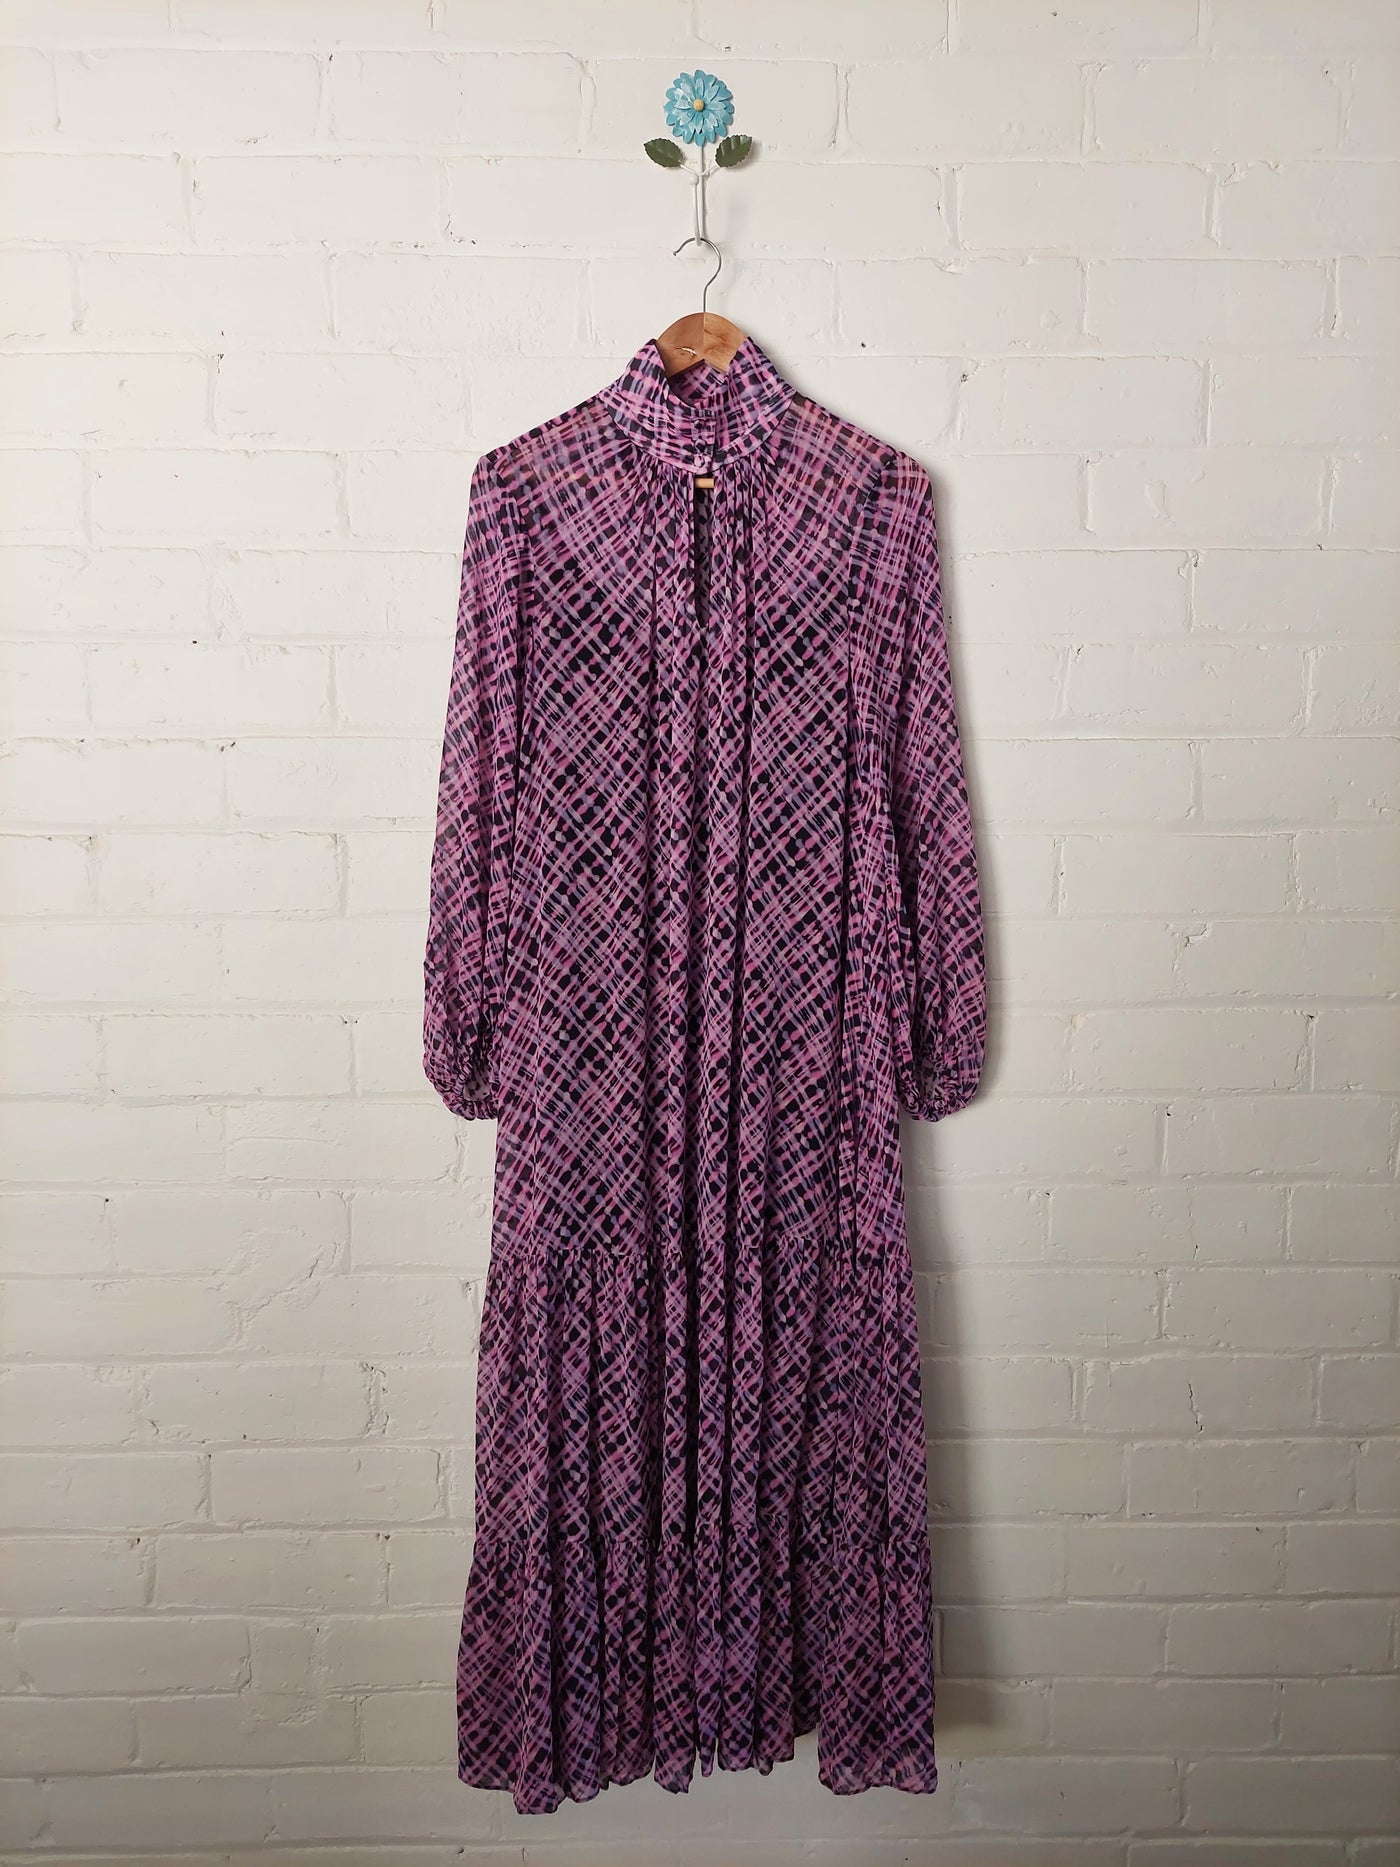 Husk 'Francis' silk dress, Size 8 - Current Season, RRP $689